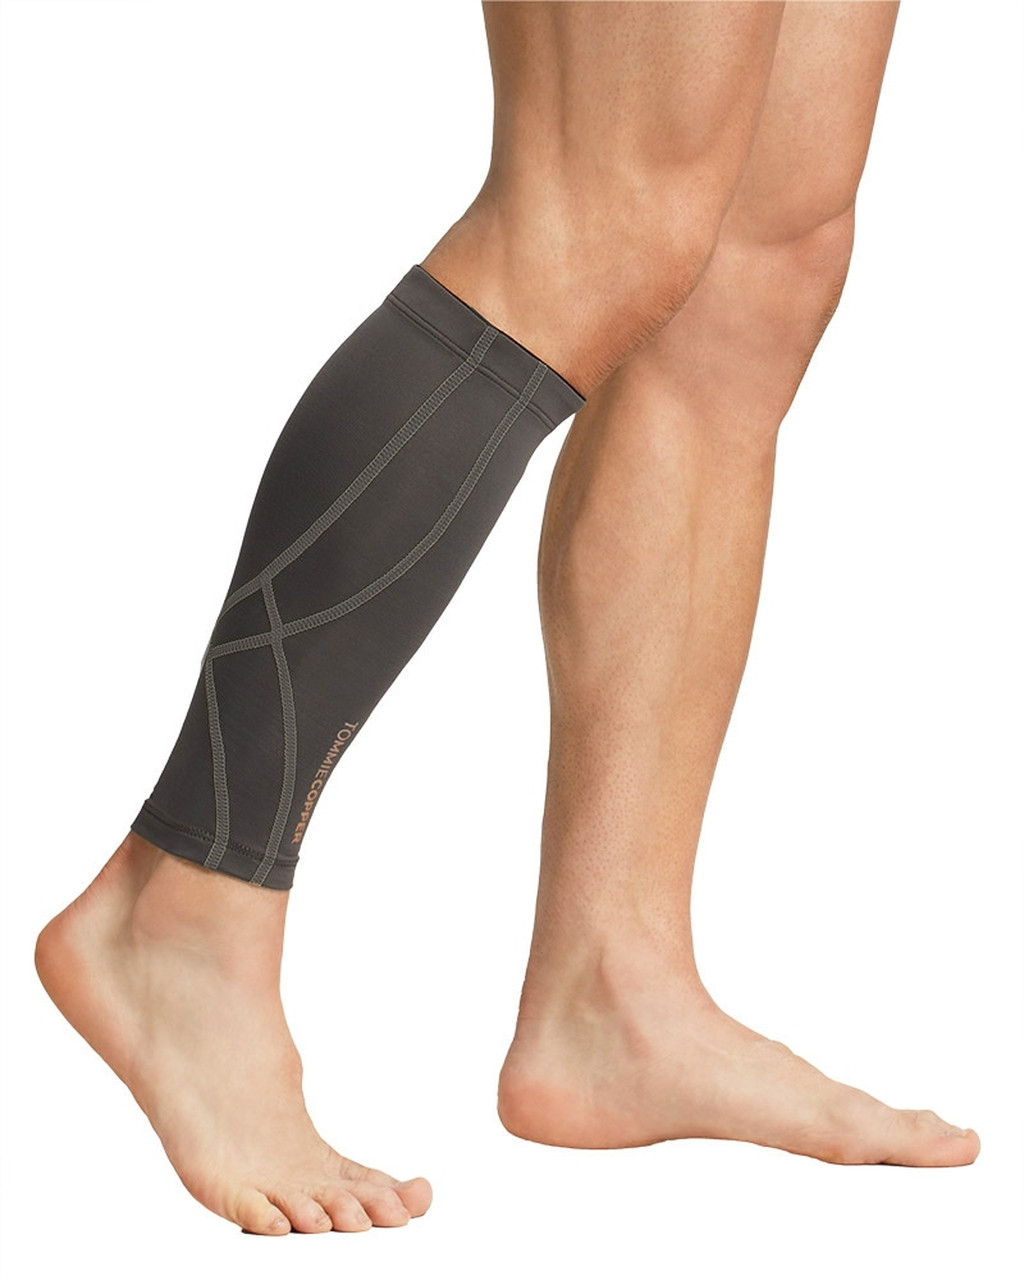 COPPER Calf Compression Sleeve Running Leg Support Brace Sport